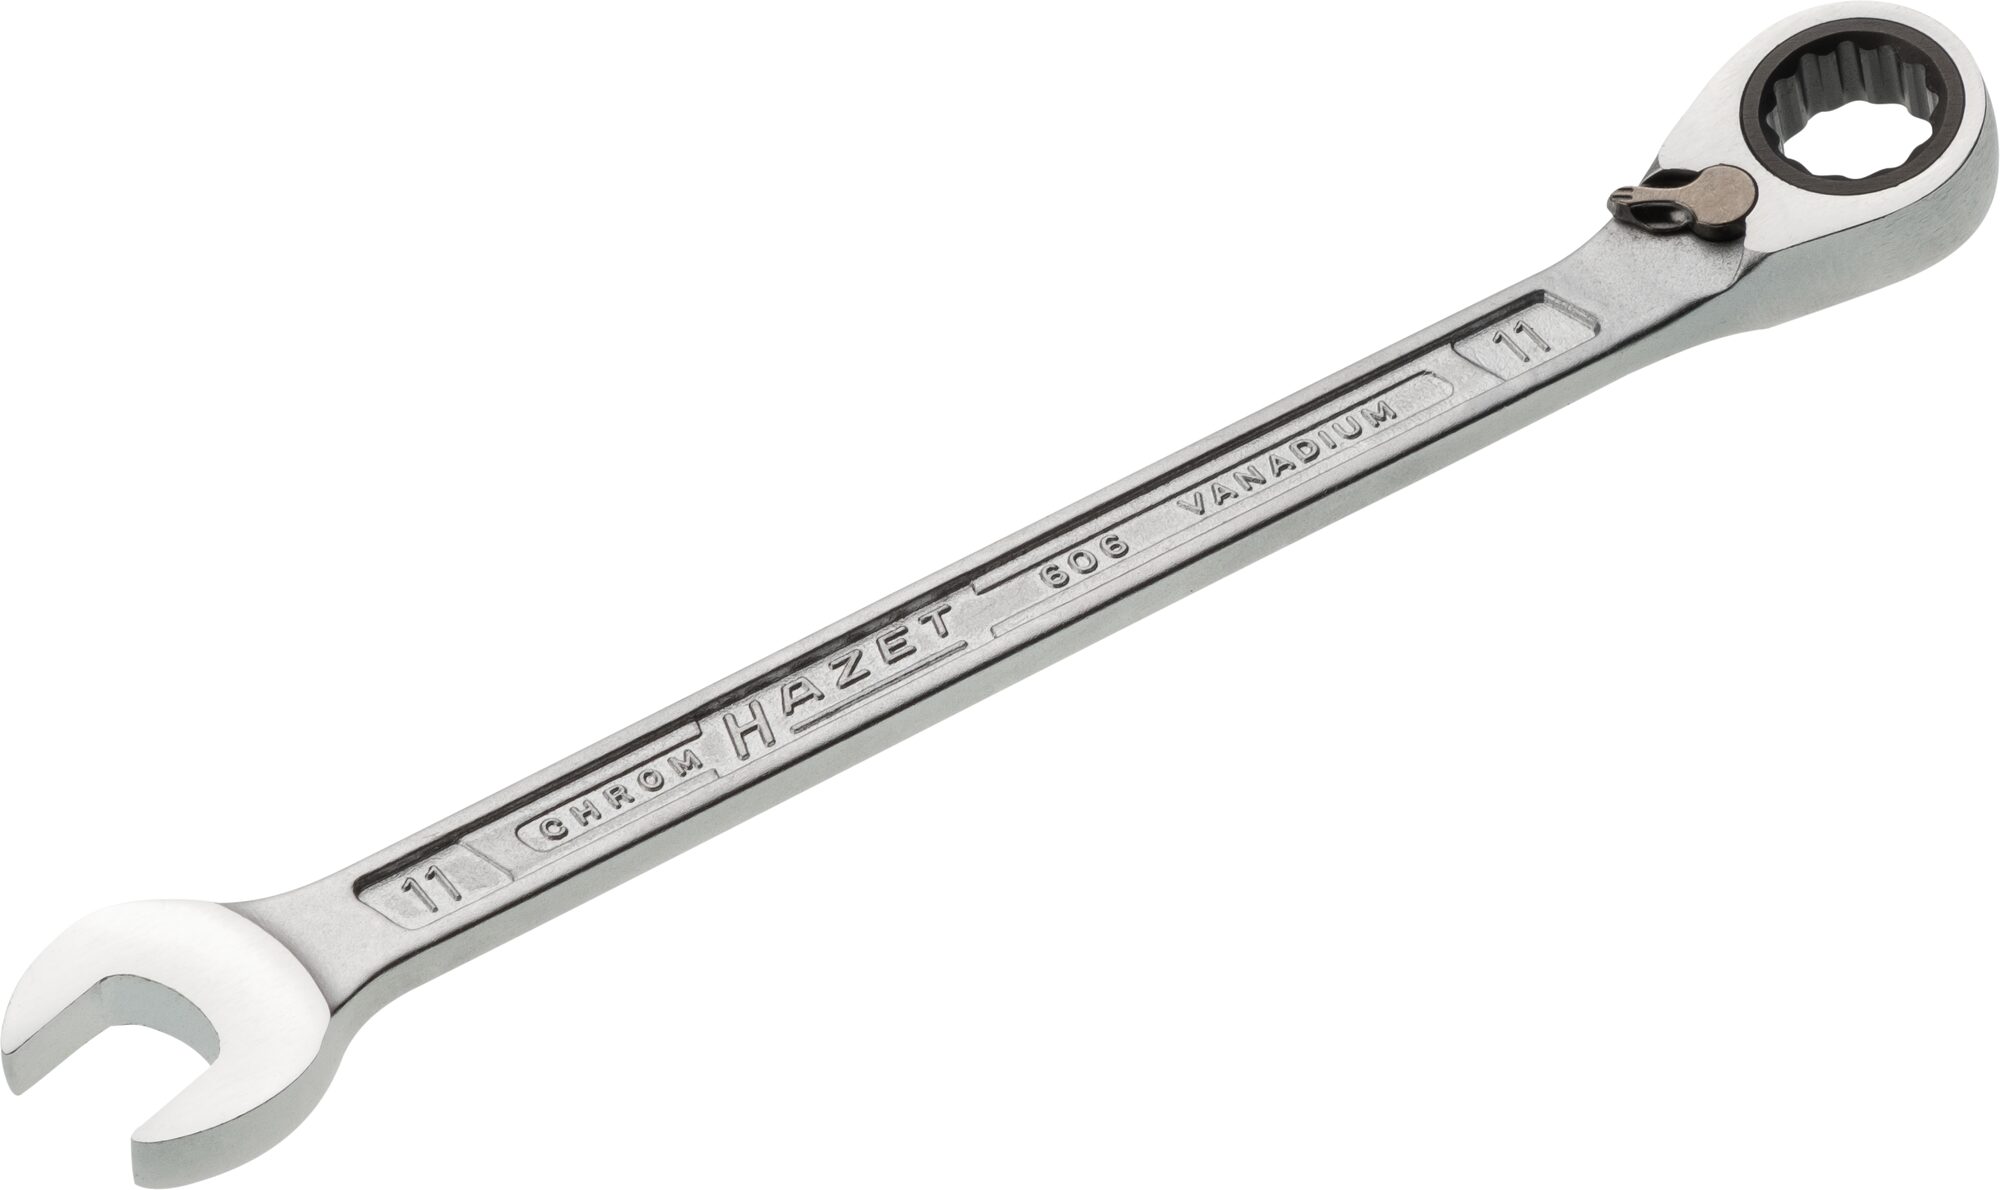 HAZET Knarren Ring-Maulschlüssel 606-11 · Außen Doppel-Sechskant-Tractionsprofil · 11 mm